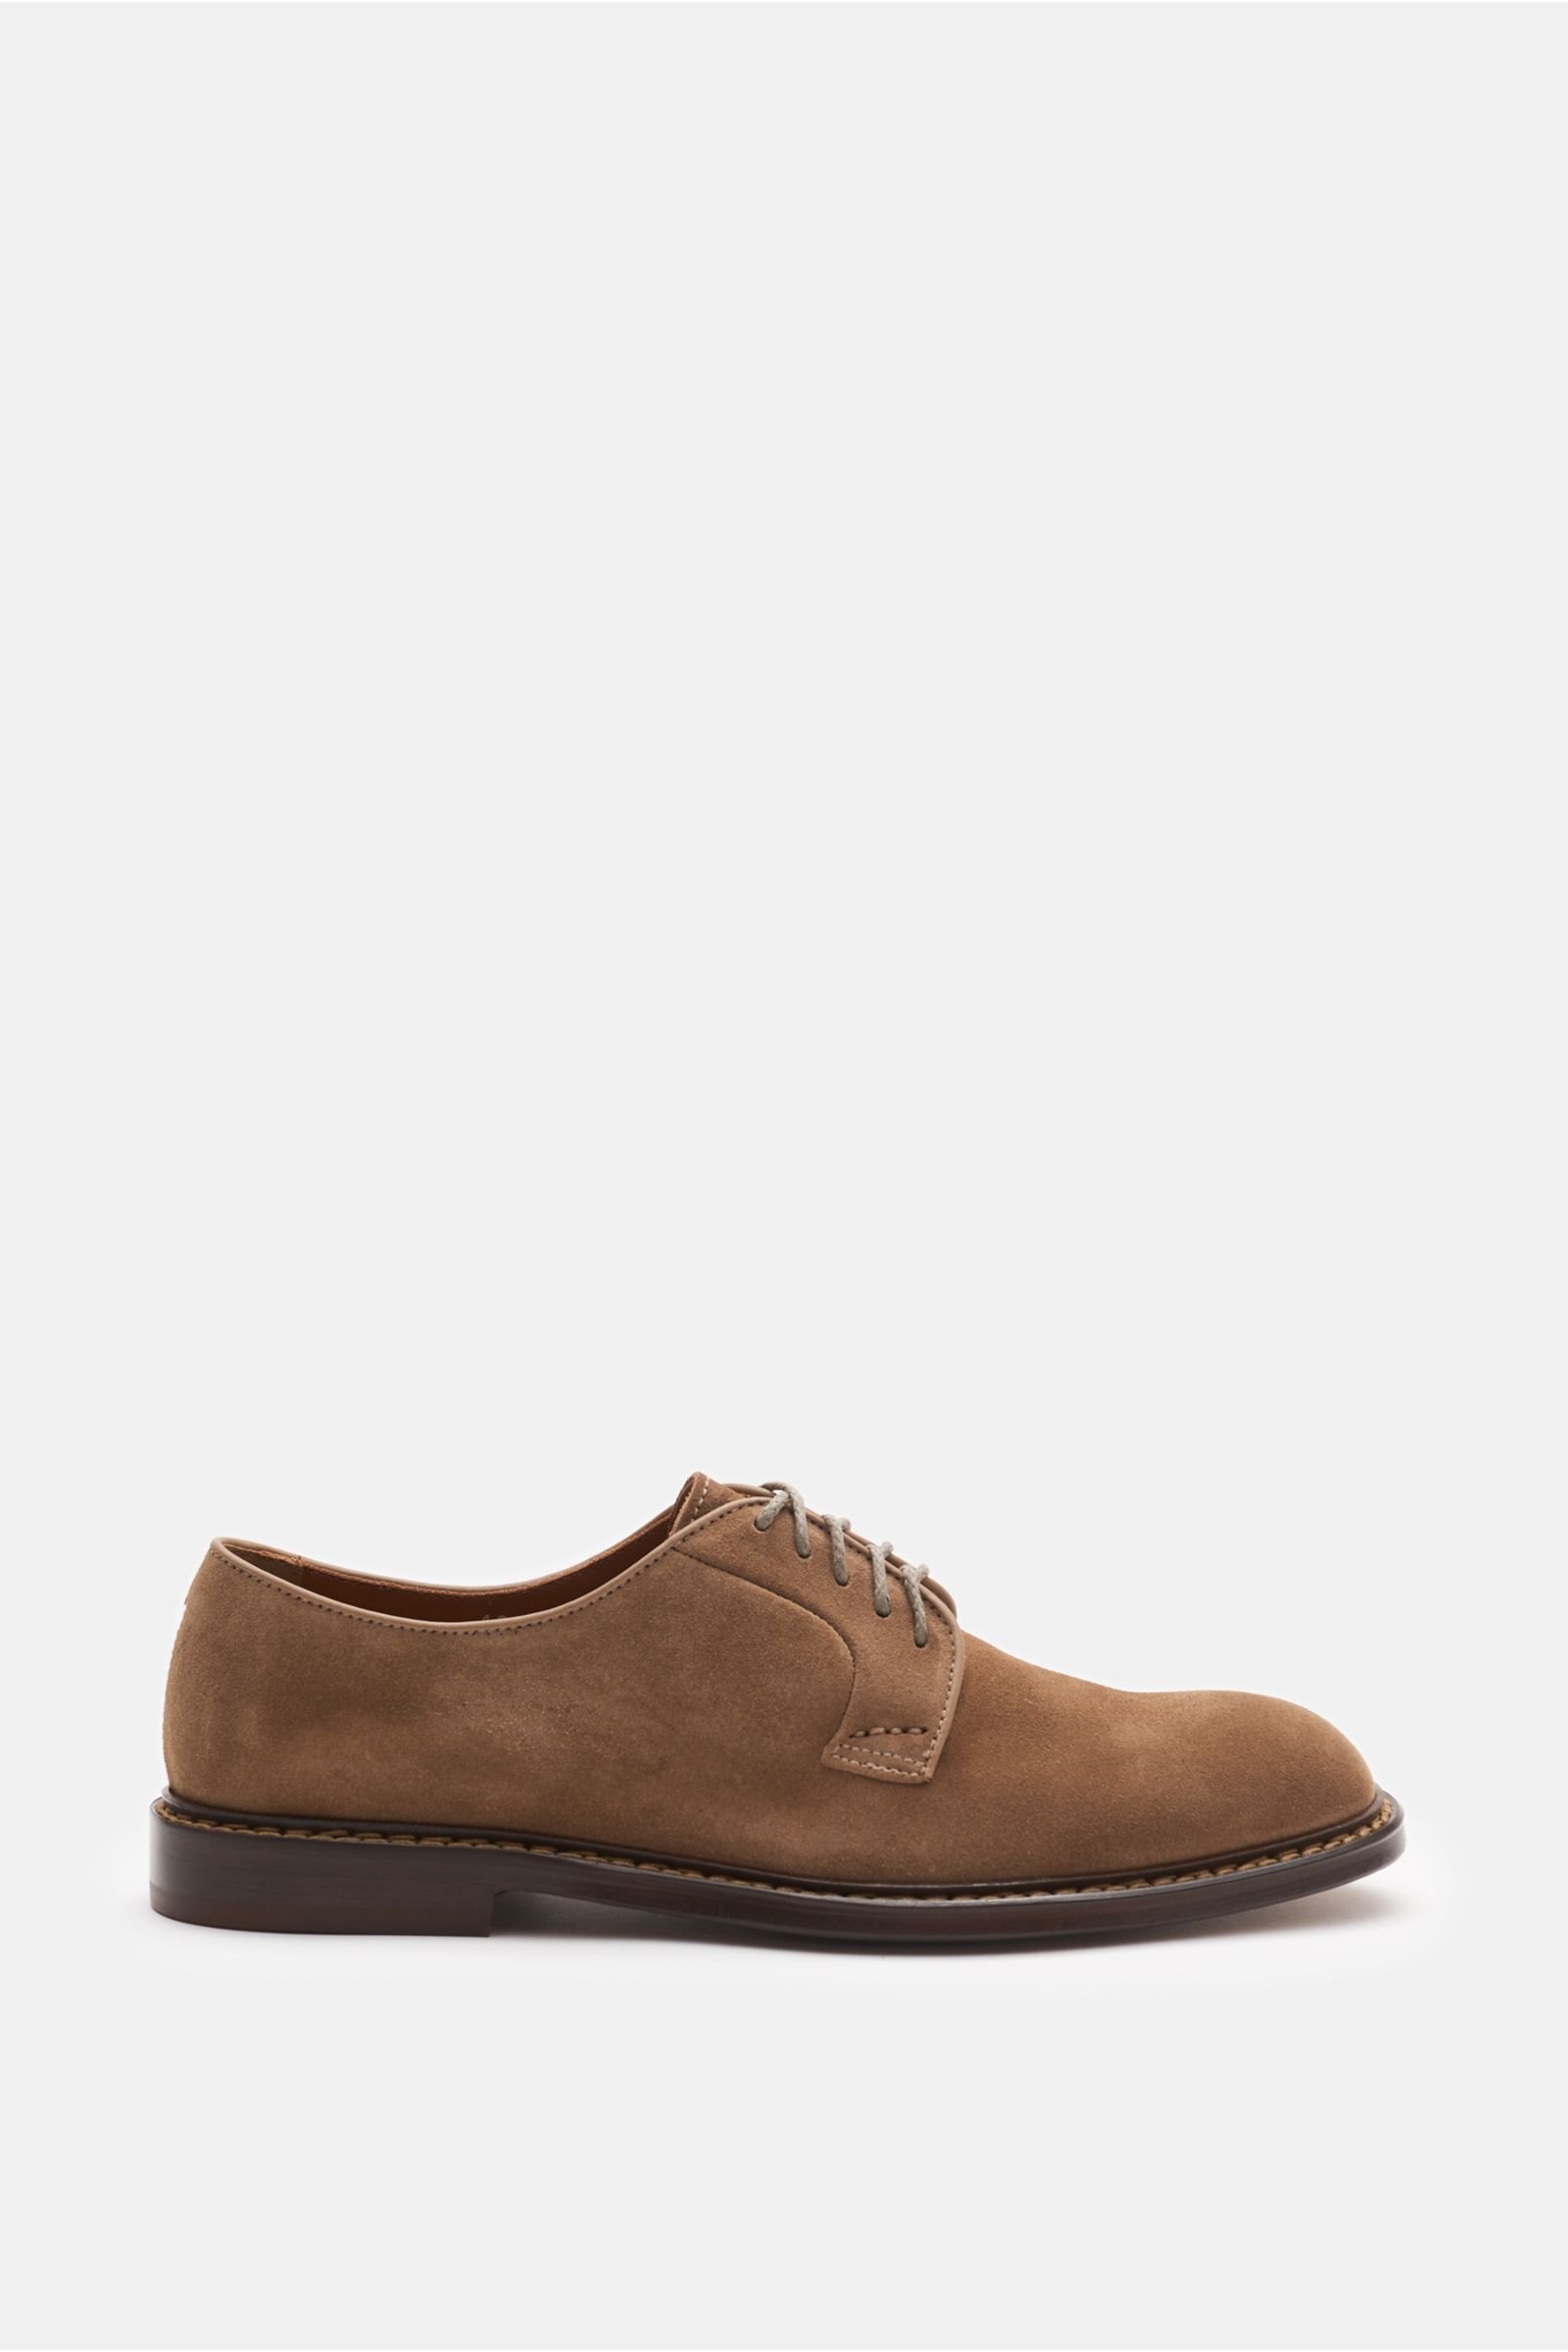 DOUCAL'S Derby shoes light brown | BRAUN Hamburg